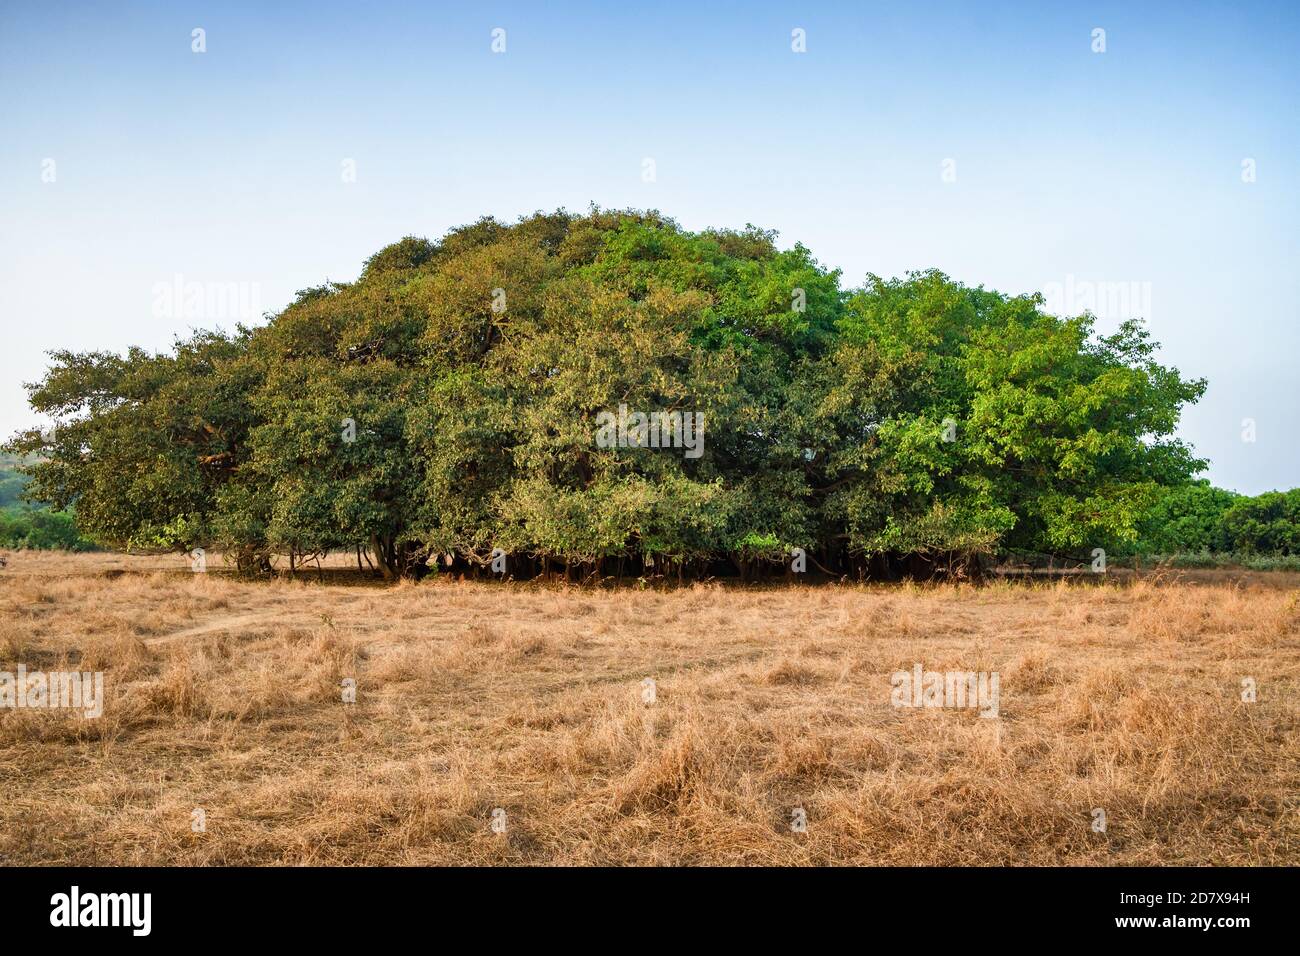 Incroyable Banyan Tree, Ficus benghalensis en Inde. Banque D'Images